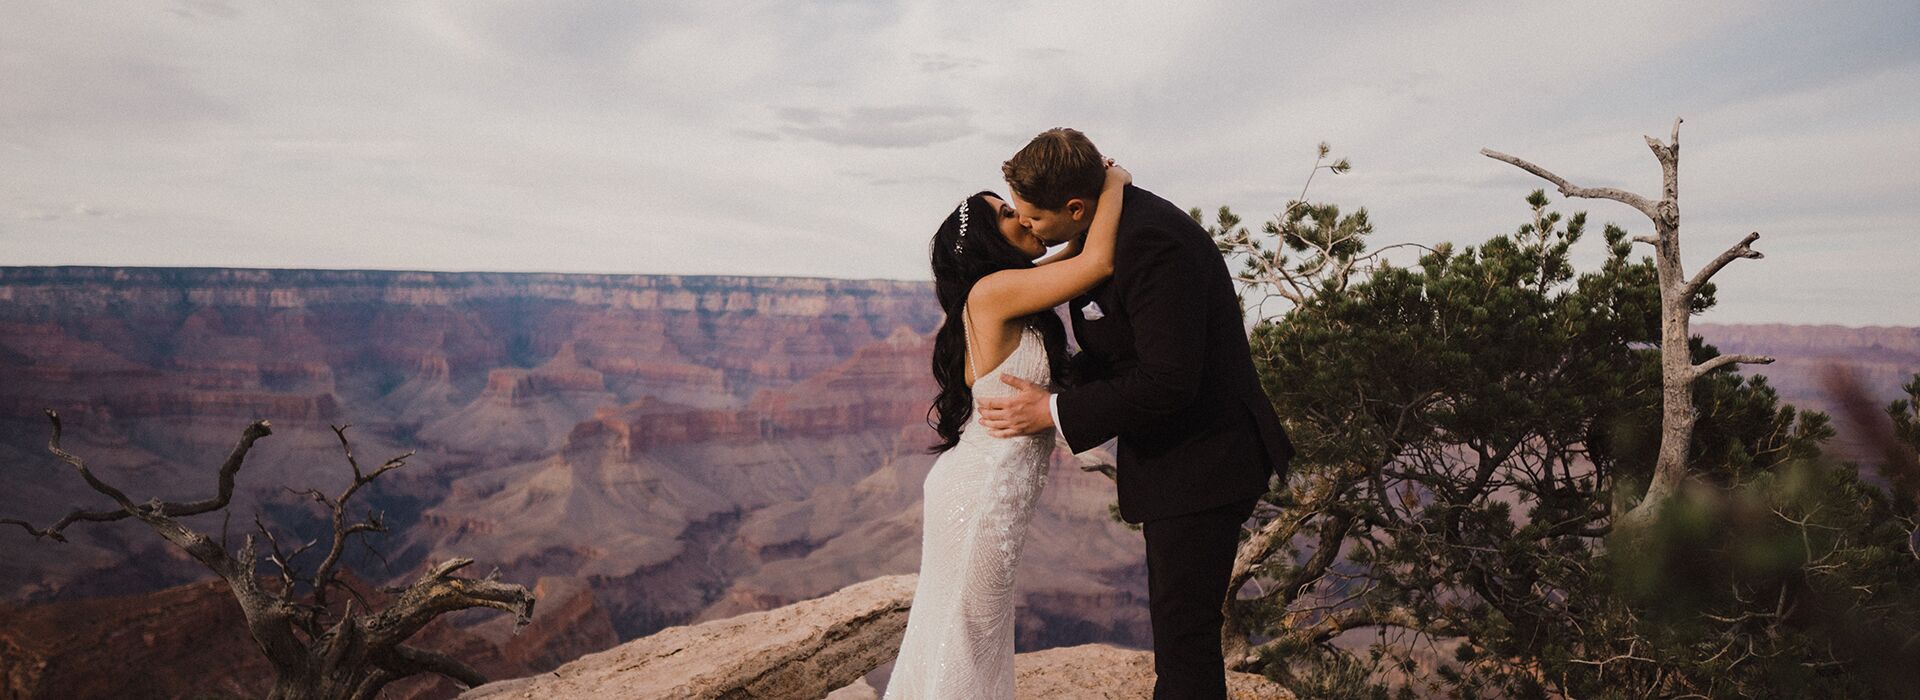 A Grand Canyon elopement